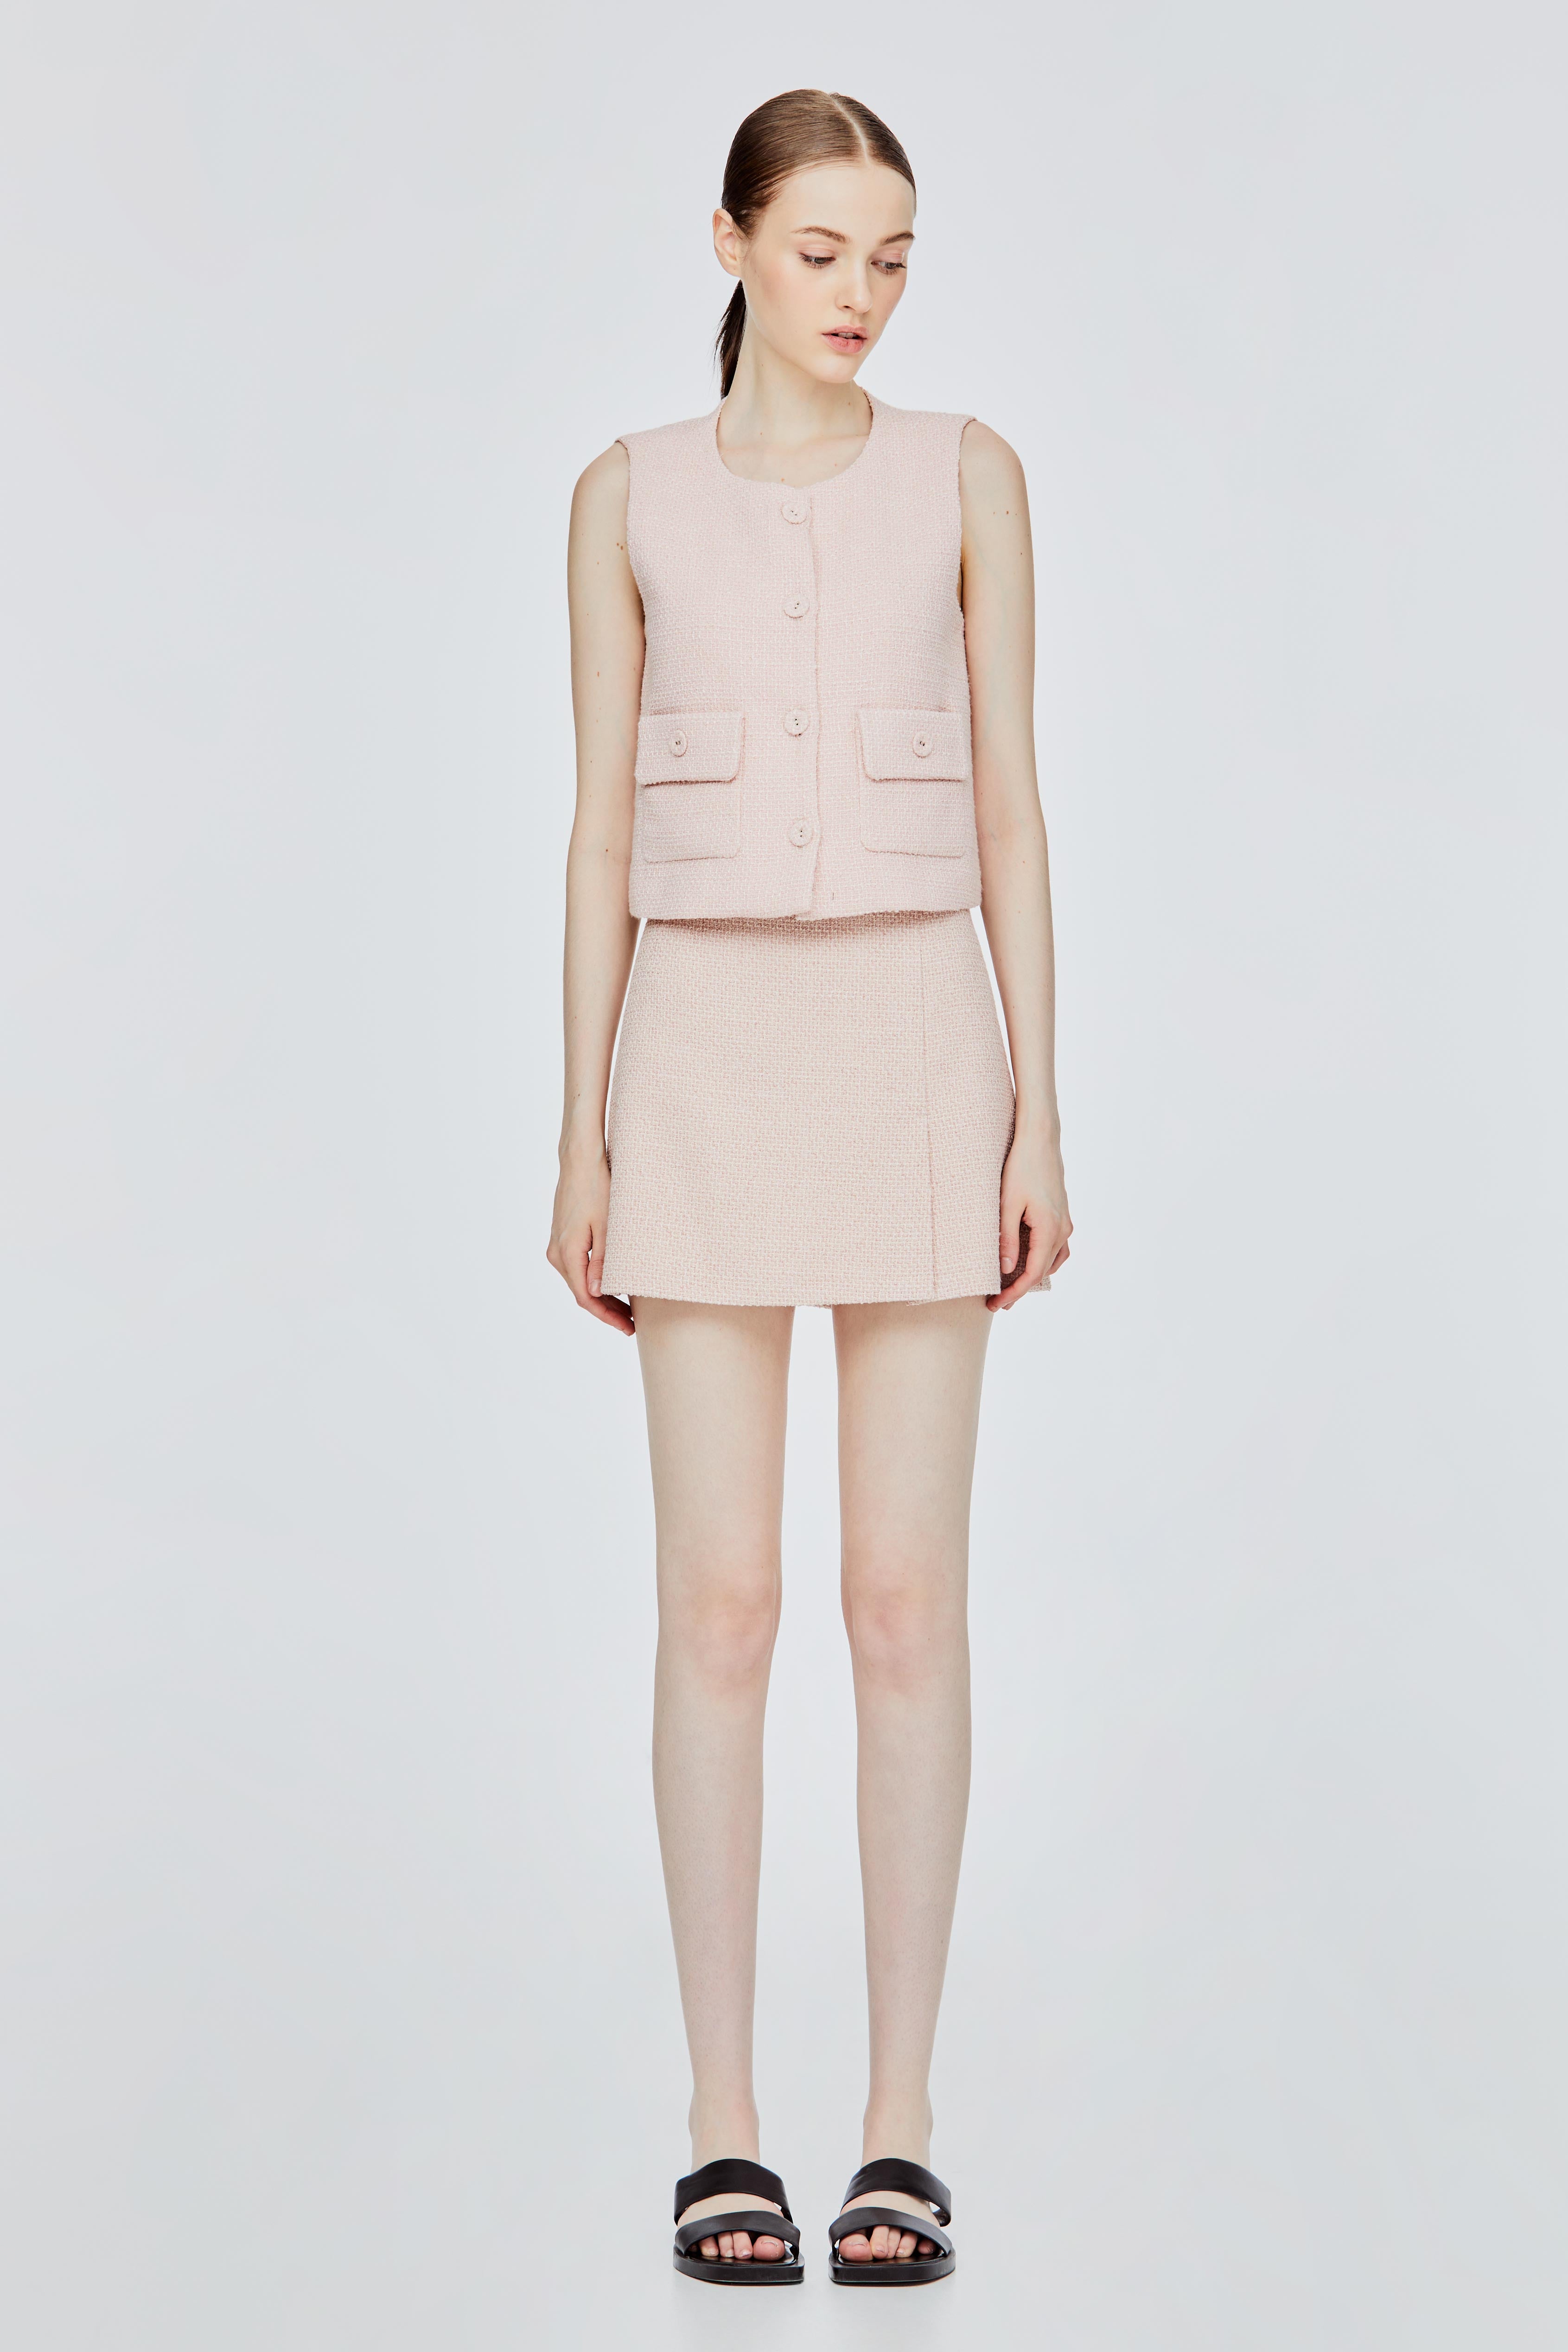 Tweed Front A-Line Slit Mini Skirt